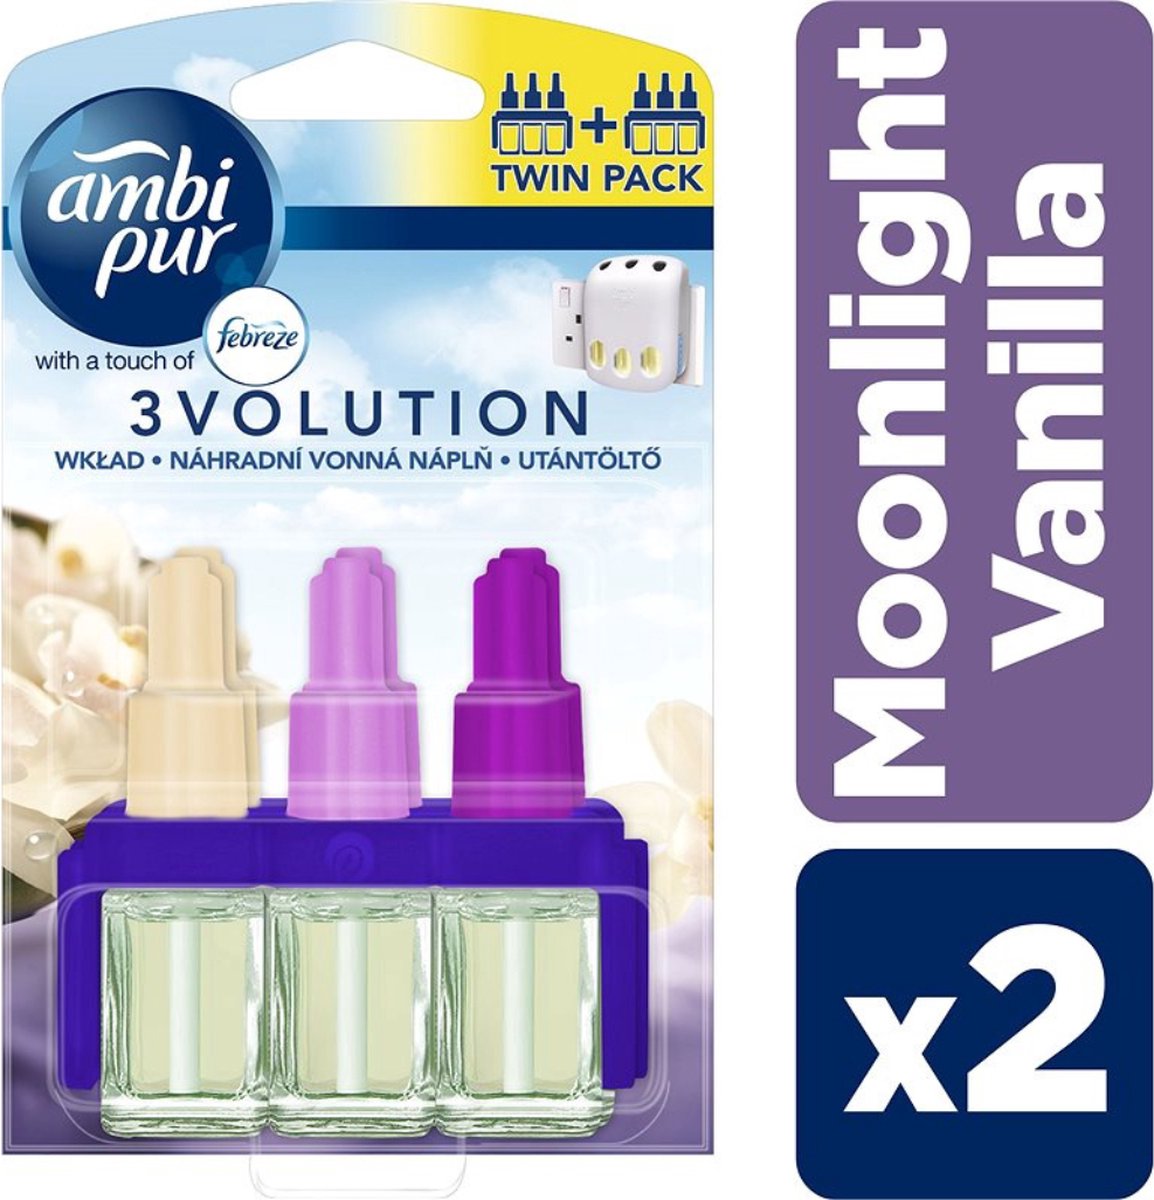 2-Pack - Ambi Pur 3 Volution Luchtverfrisser Navulling Moonlight Vanille - 2 x 20 ml